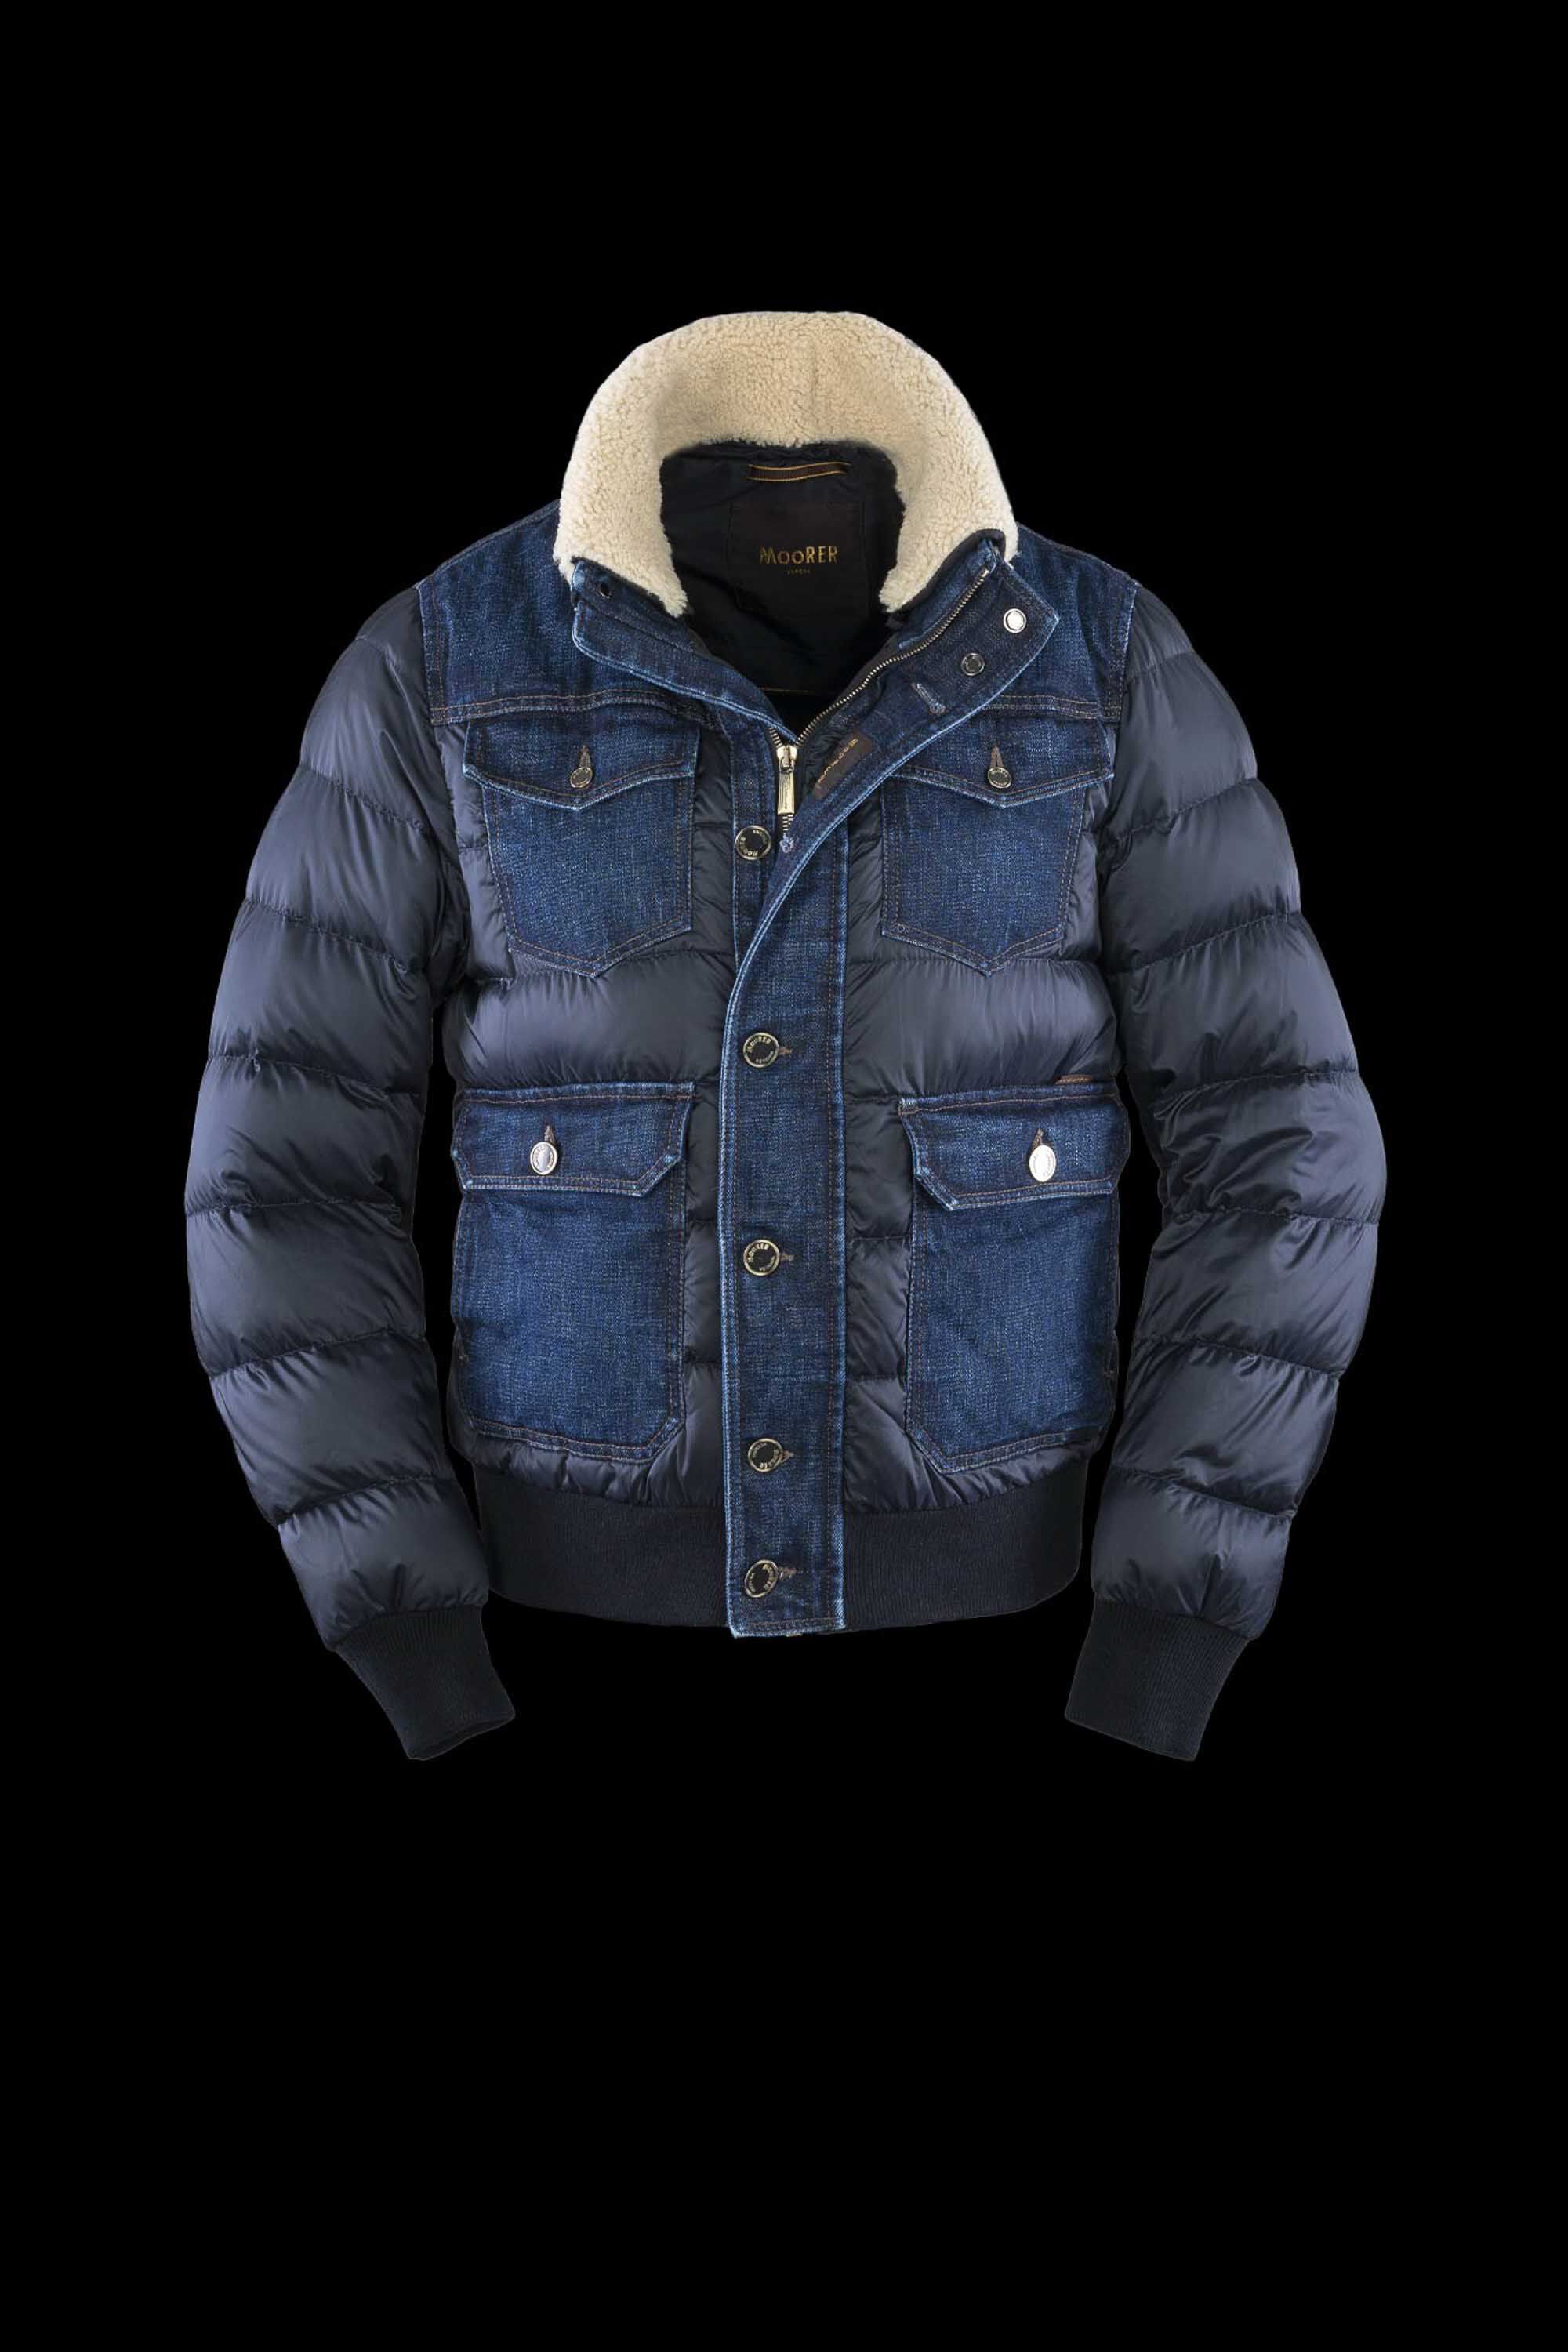 Men's Outerwear - Men's Luxury Coats & Jackets | MooRER®